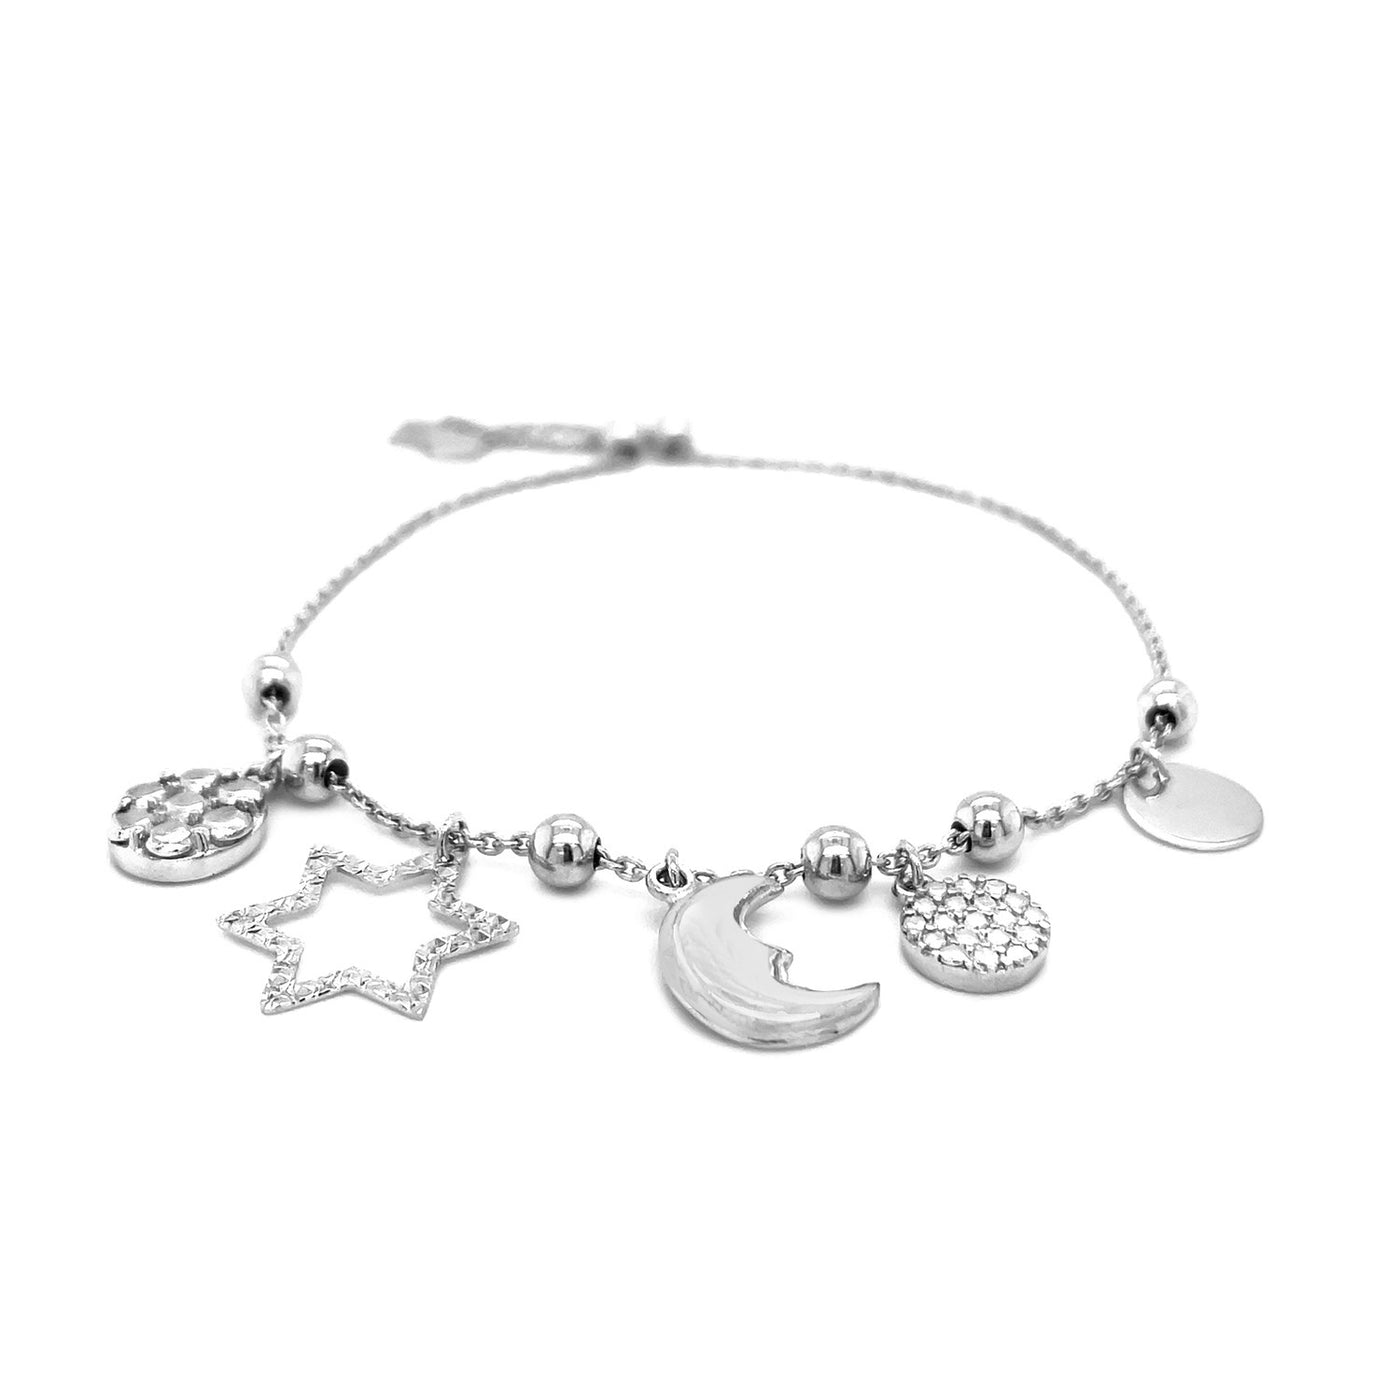 Women's Celestial Charms Cubic Zirconia Adjustable Sterling Silver Bead Bracelet